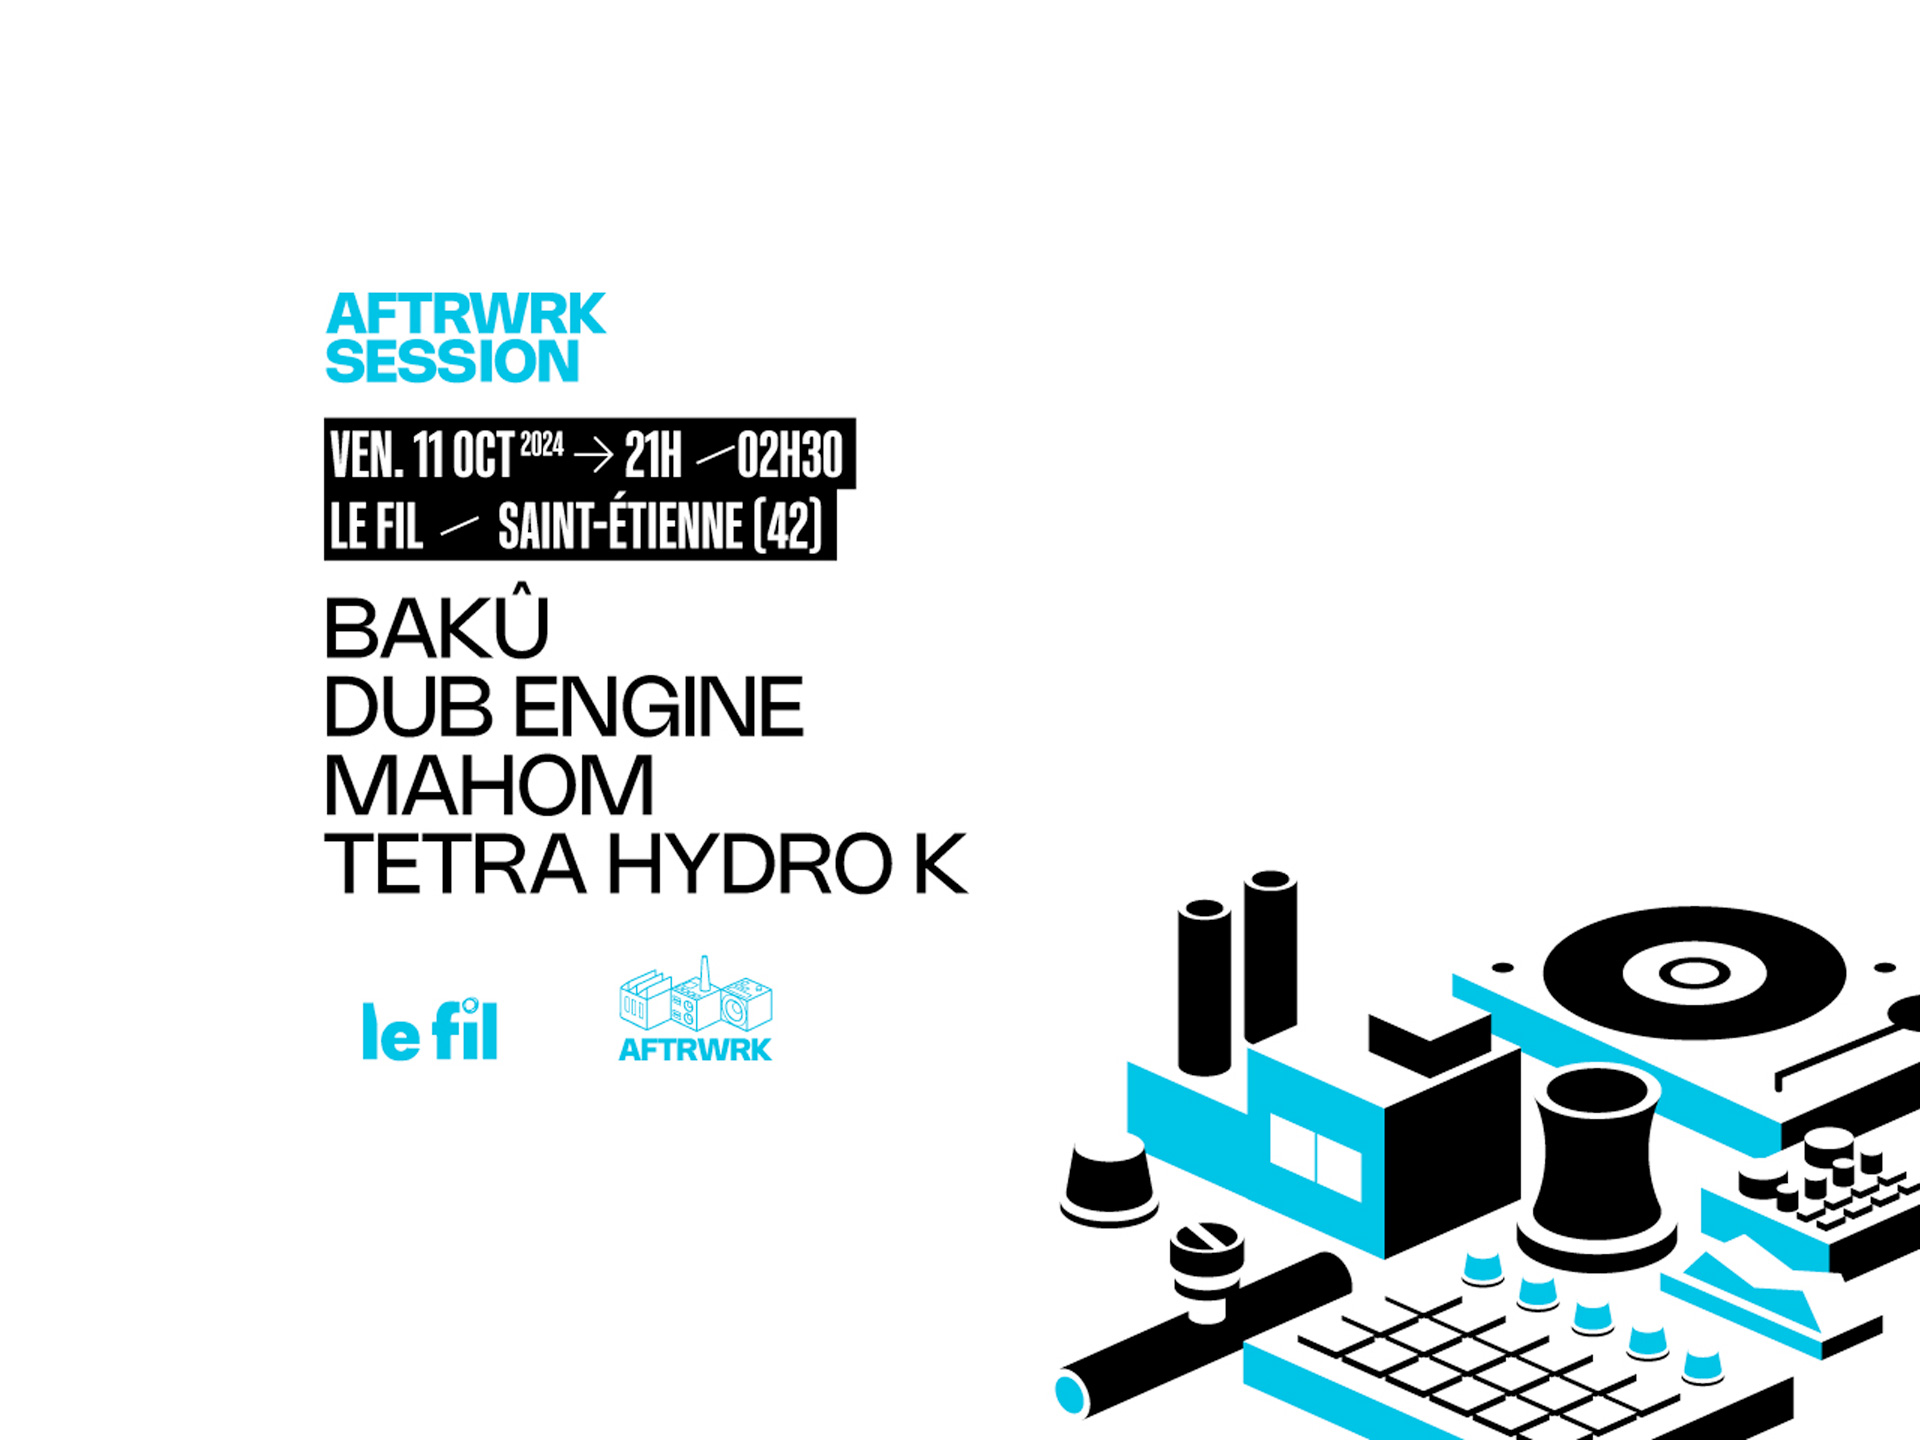 Concert - Tetra Hydro K + Mahom + Dub Engine + Bakû